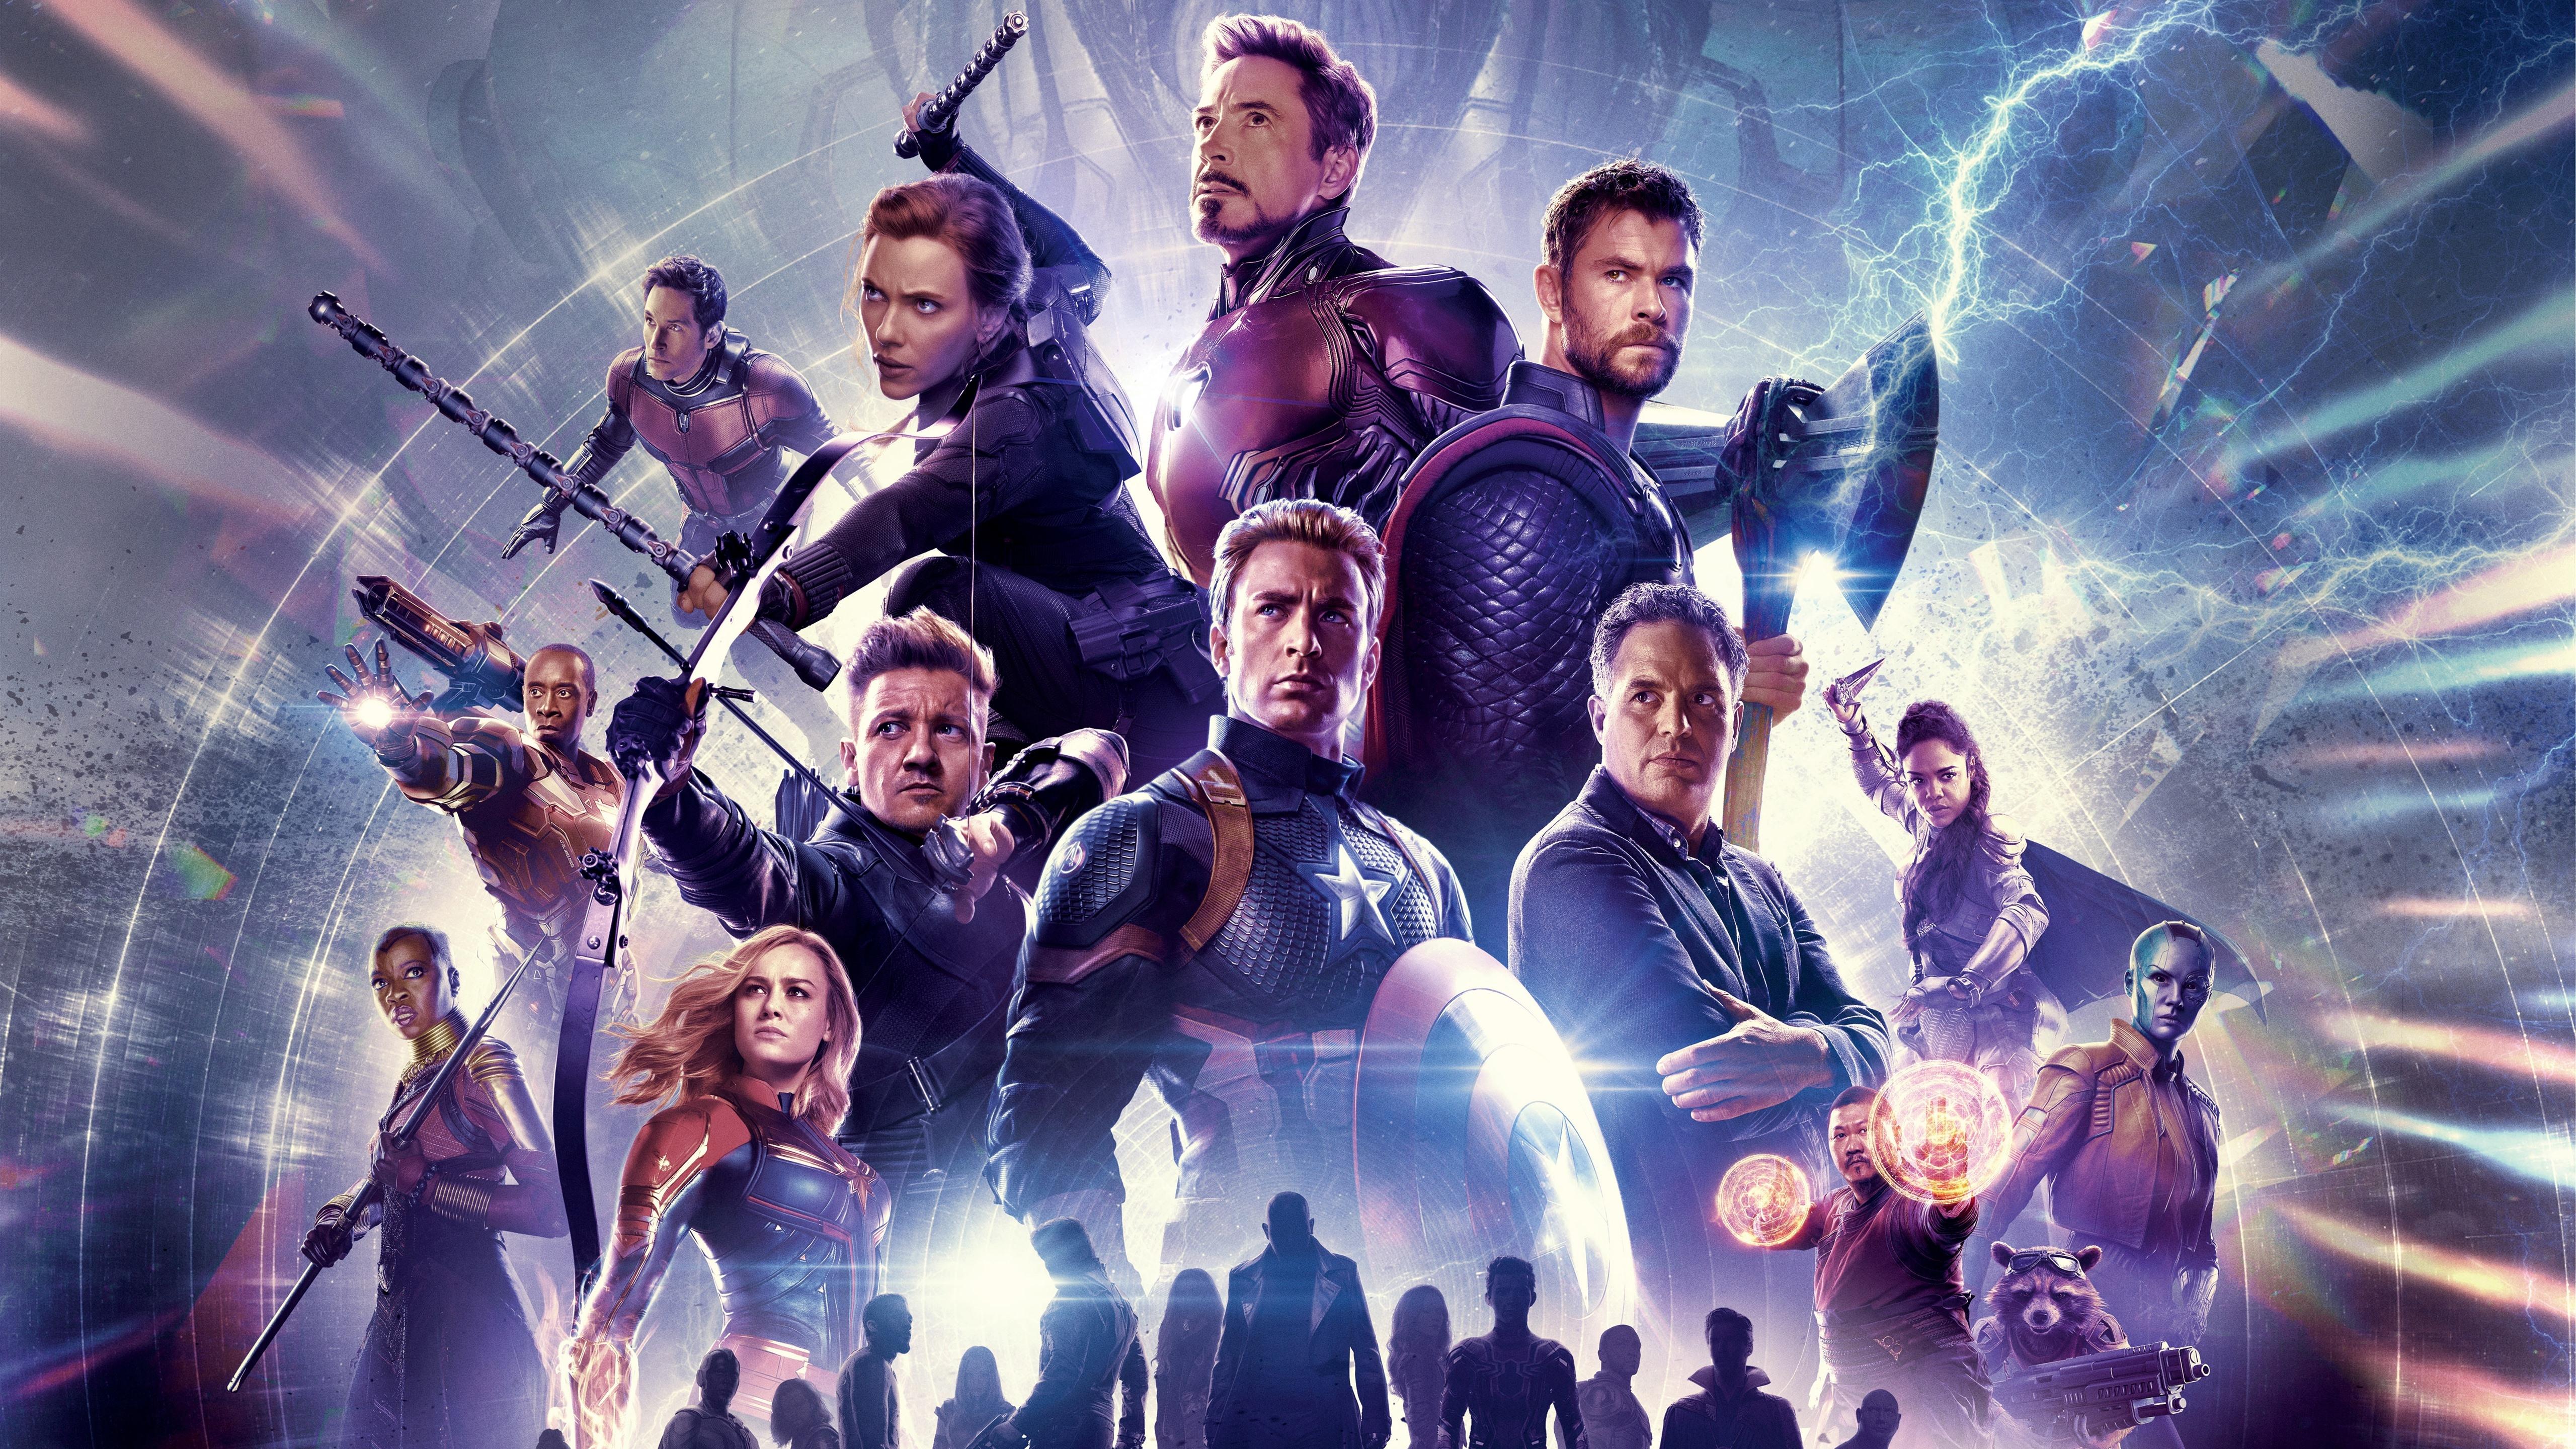 Download 5120x2880 Avengers: Endgame, Poster, Superheroes, Thor, Captain America, Iron Man Wallpaper